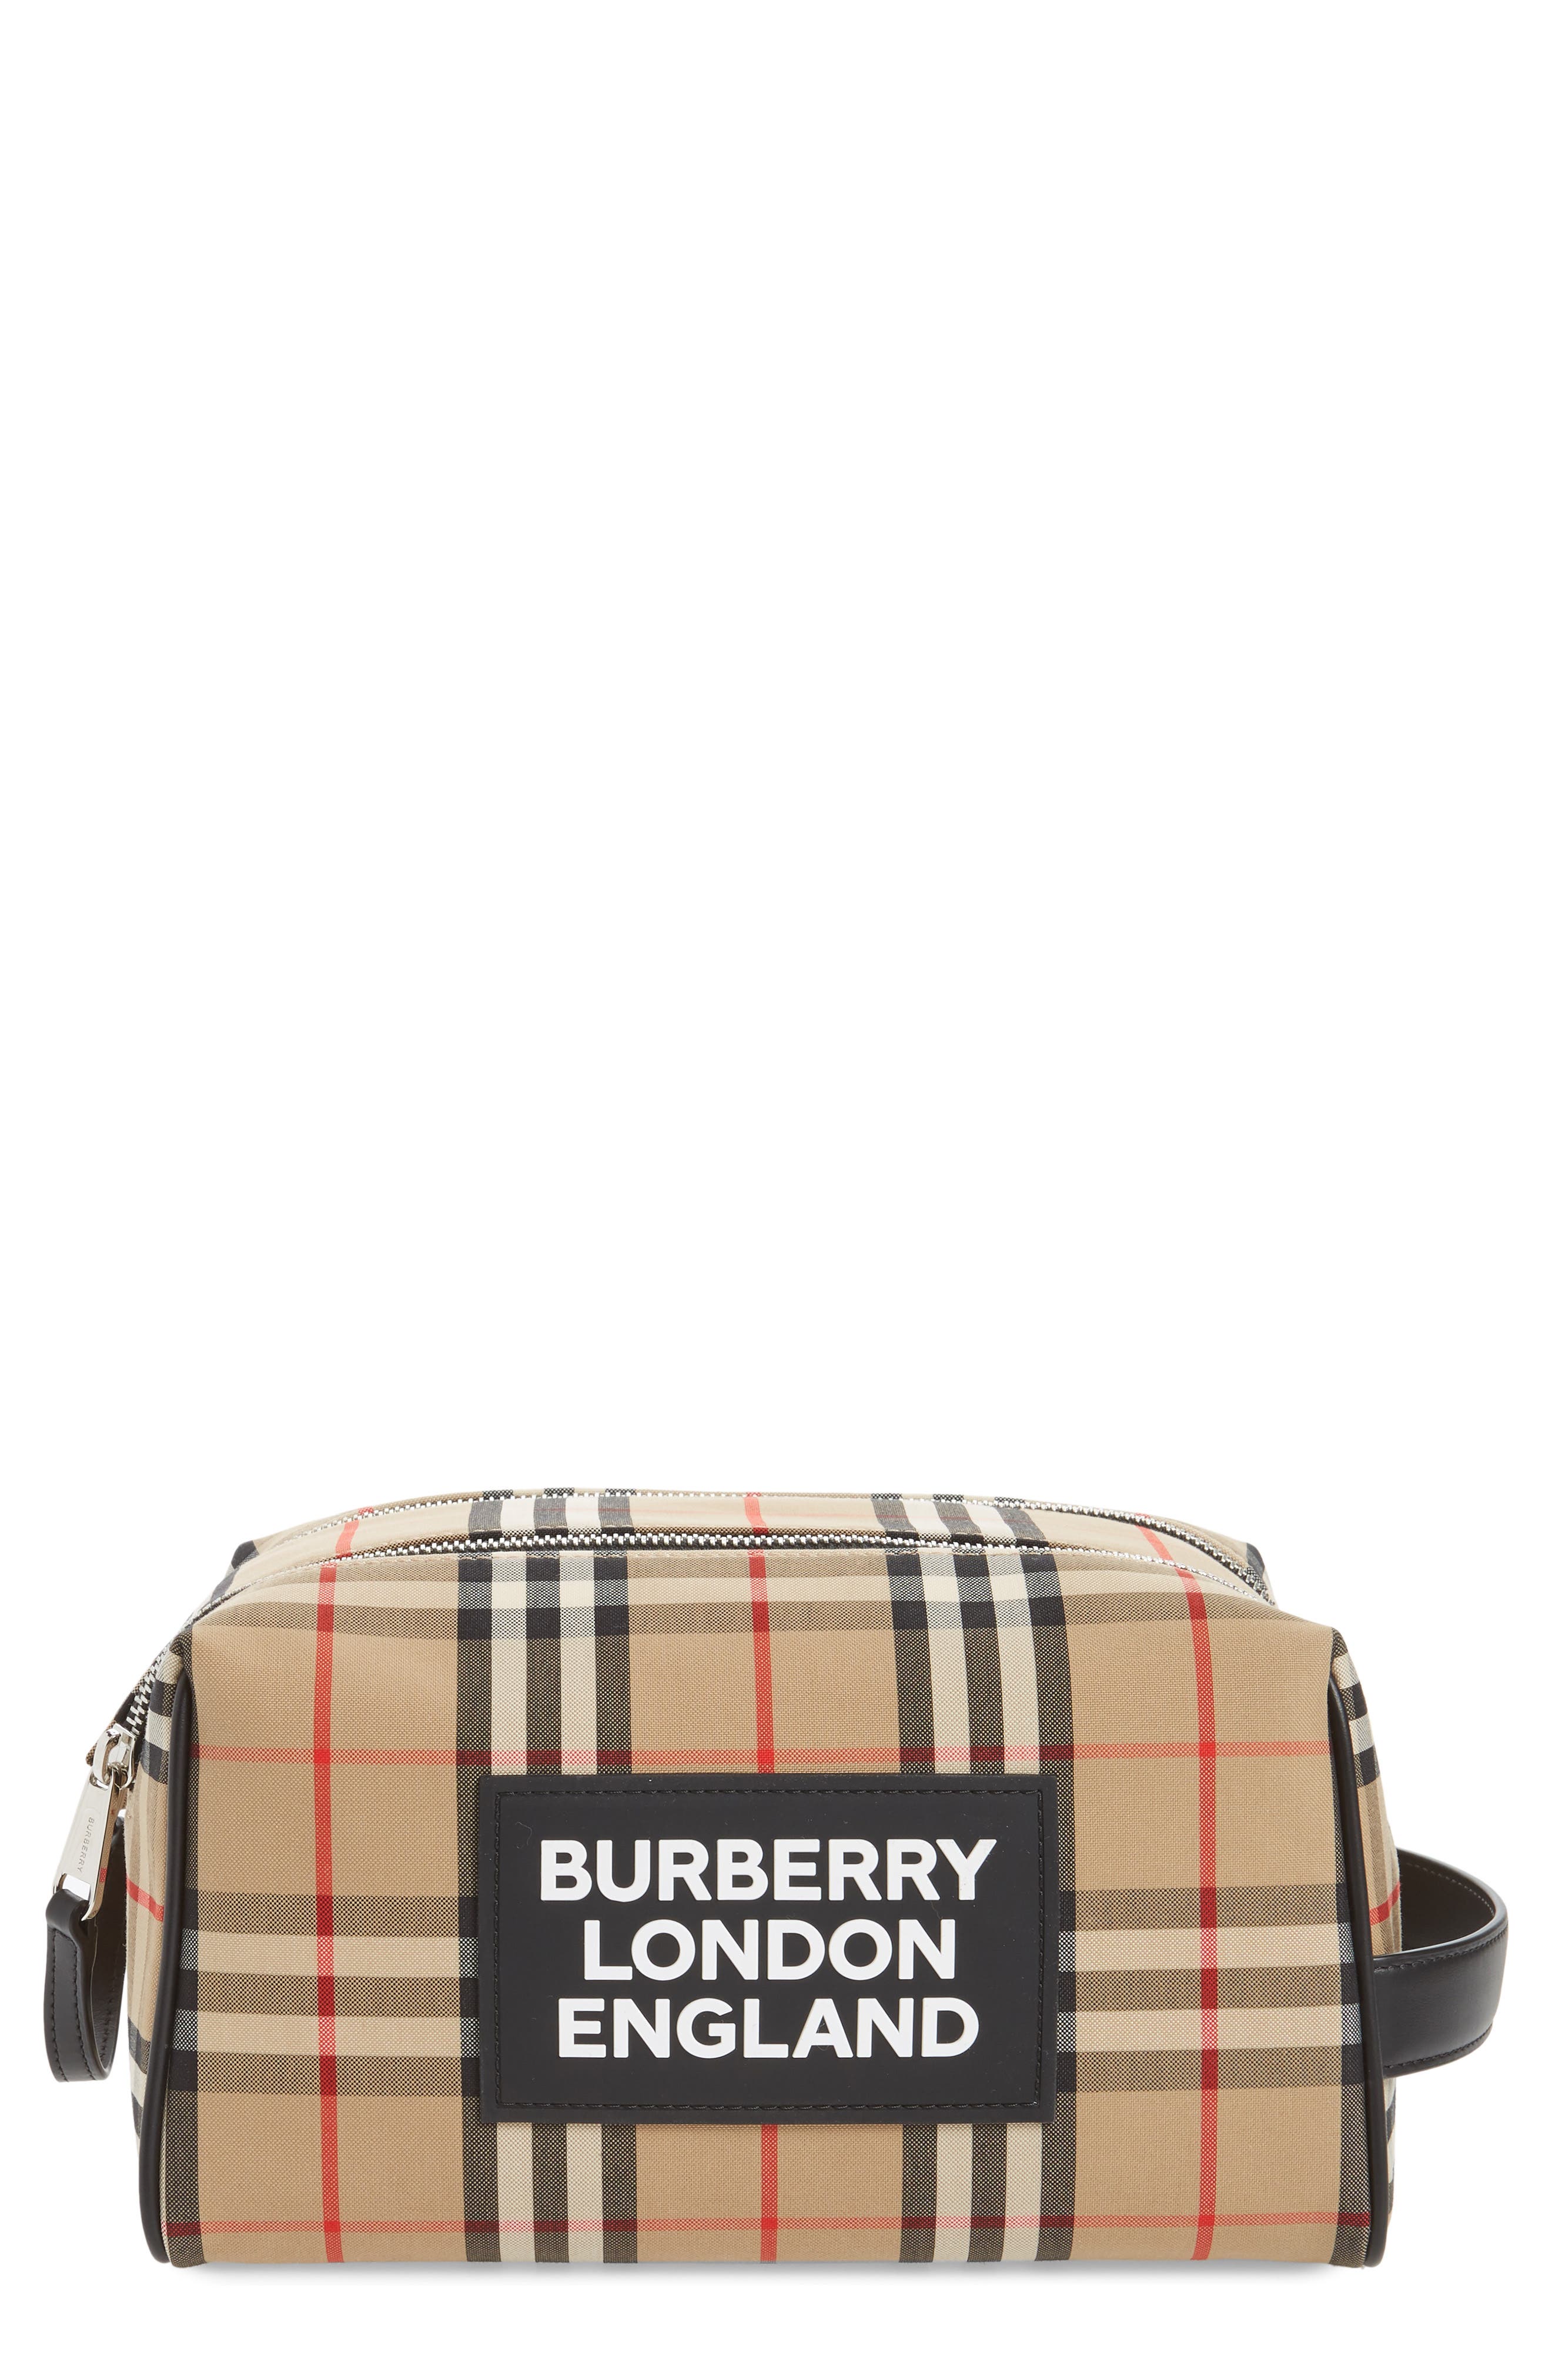 burberry check dopp kit